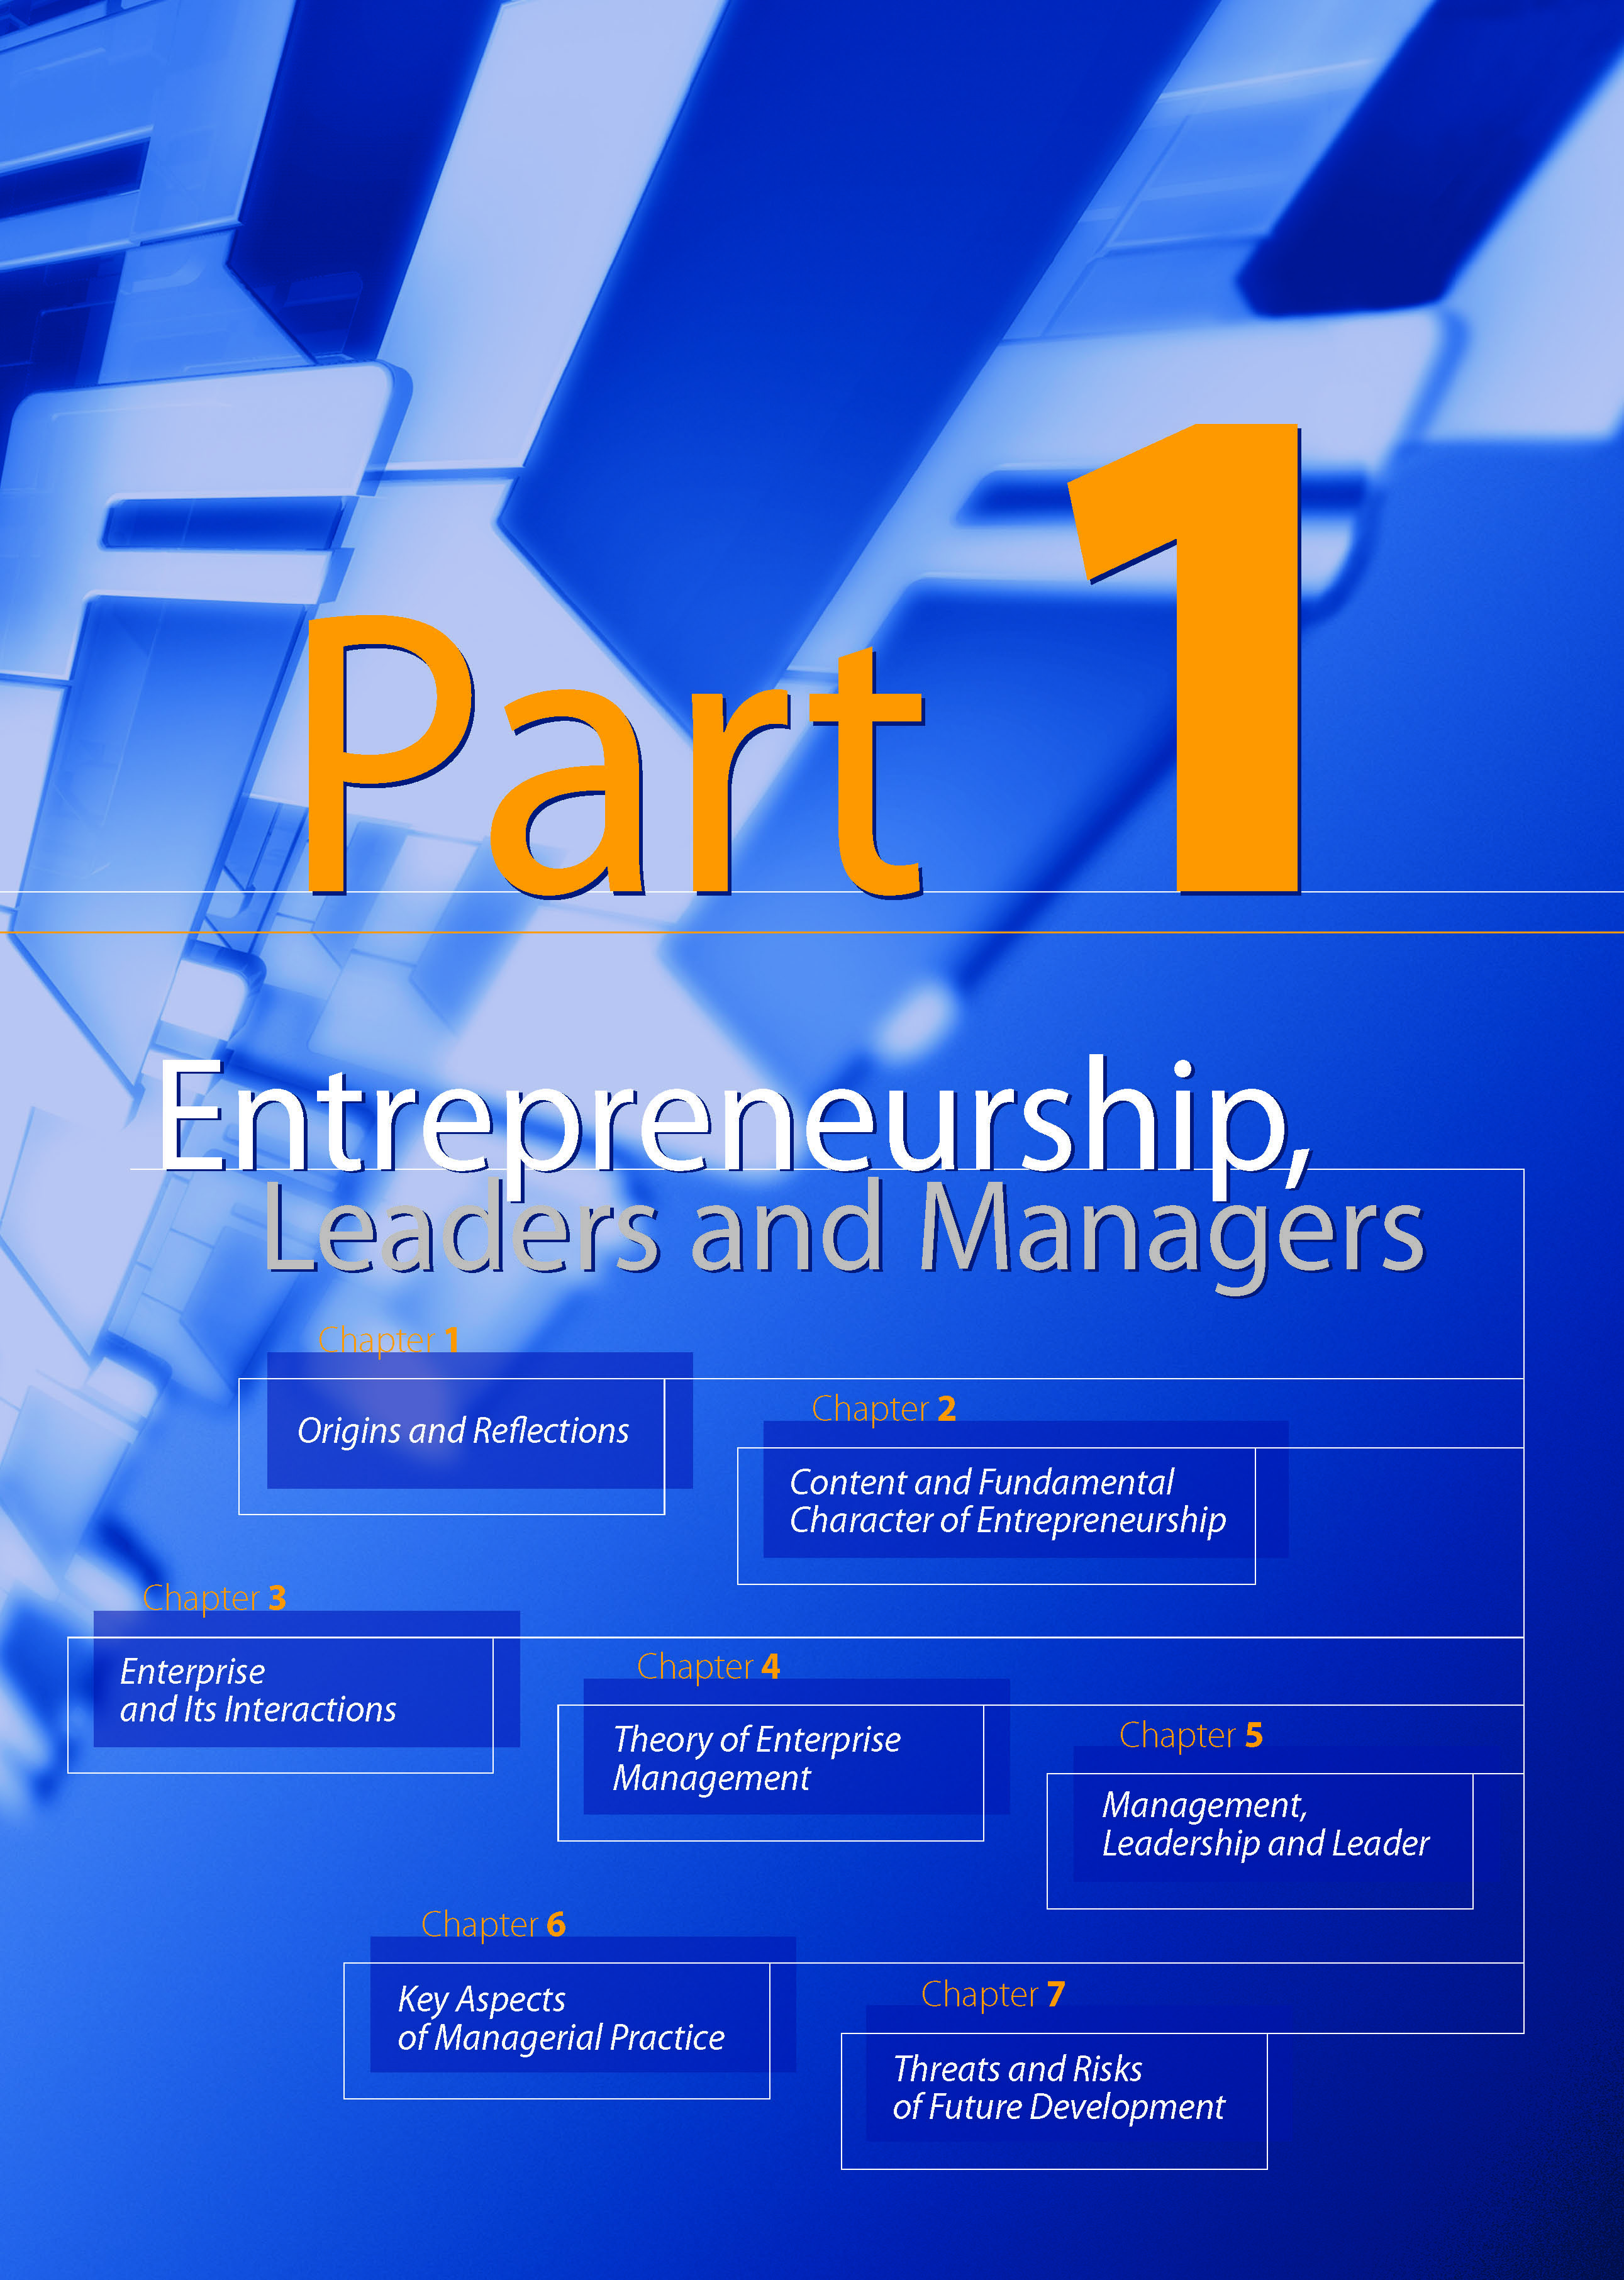 Enterprise and Entrepreneurship: Entrepreneurial Environment